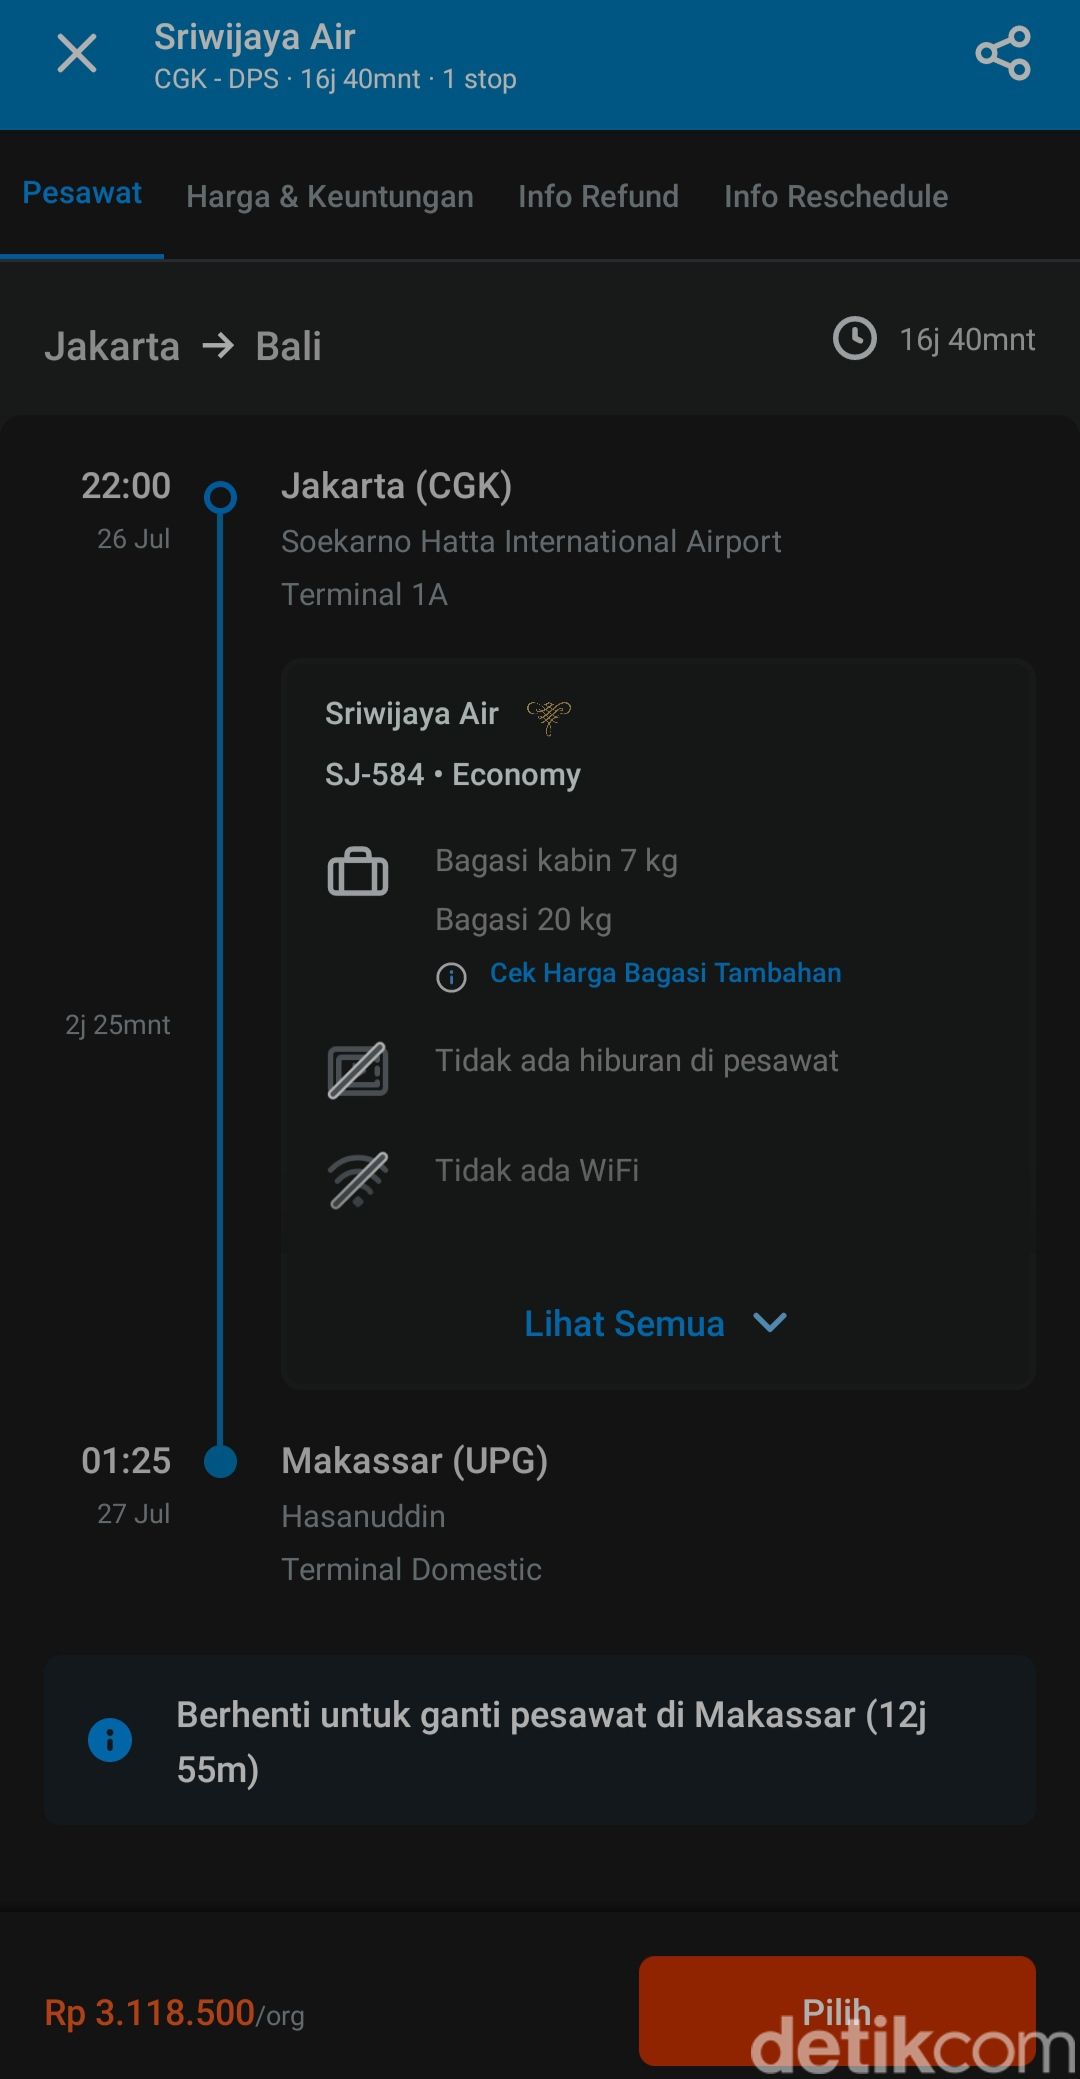 Tiket pesawat Jakarta-Bali